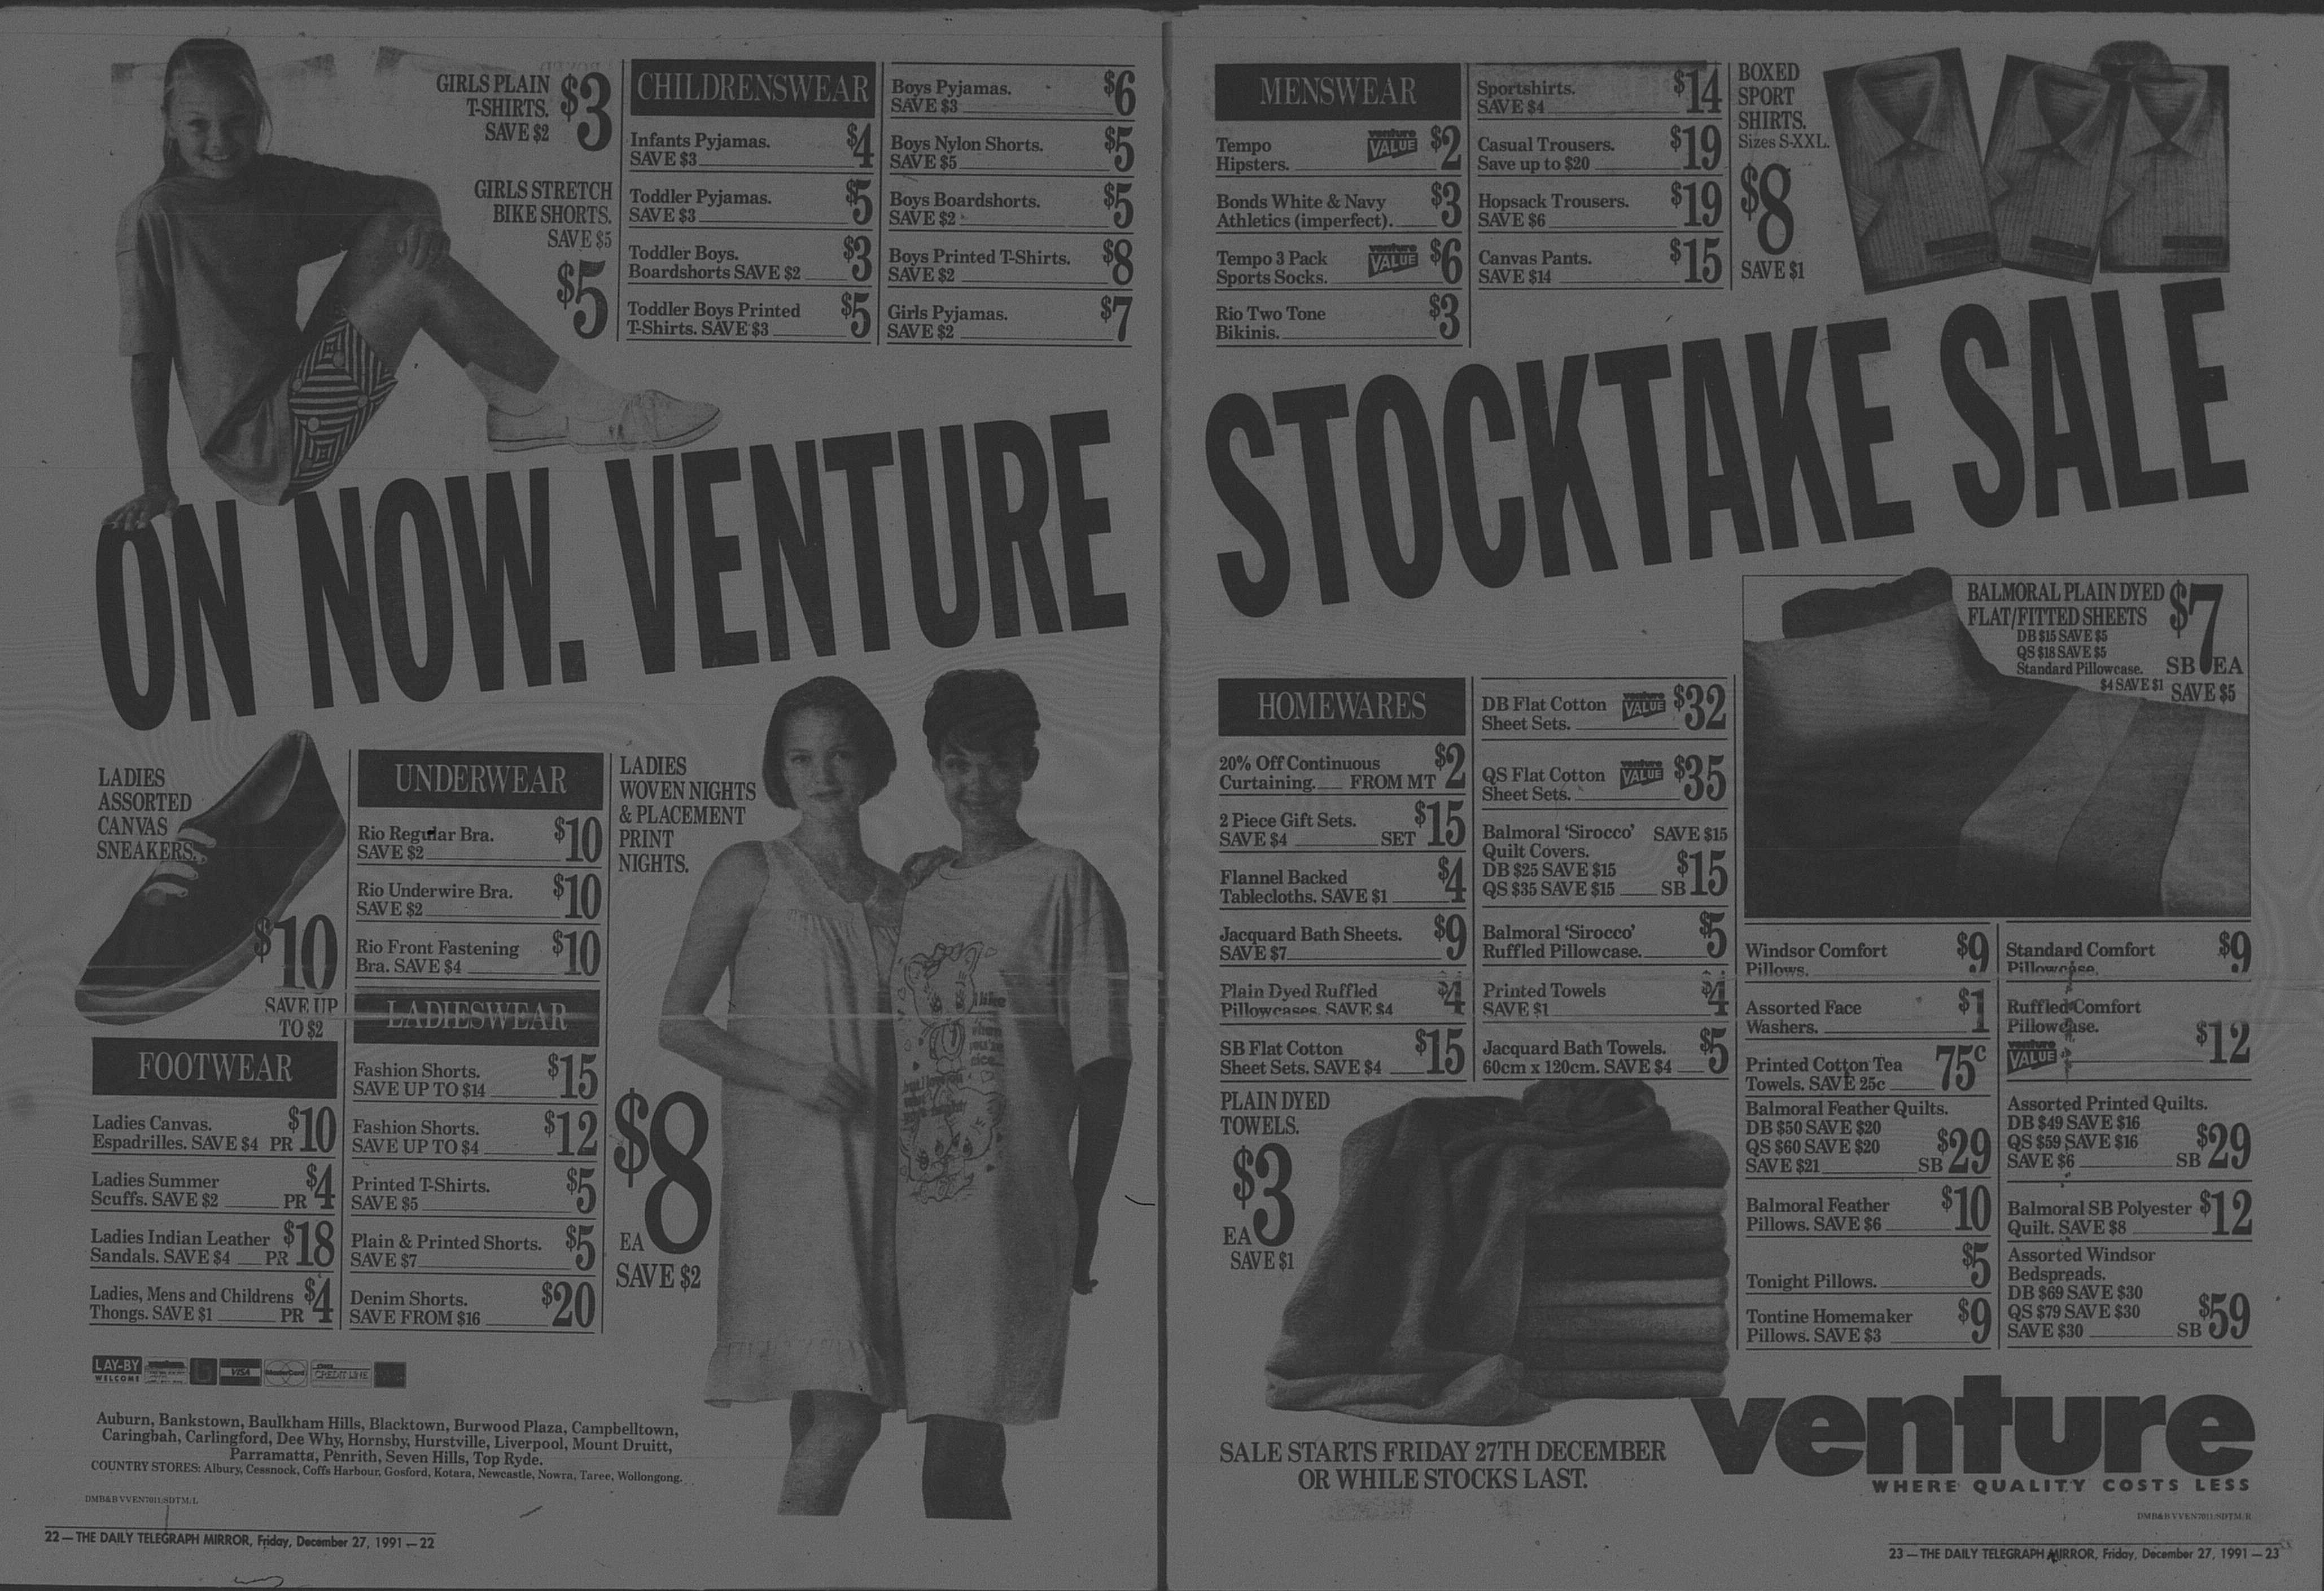 Venture Stocktake Sale Ad December 27 1991 daily telegraph 28-29